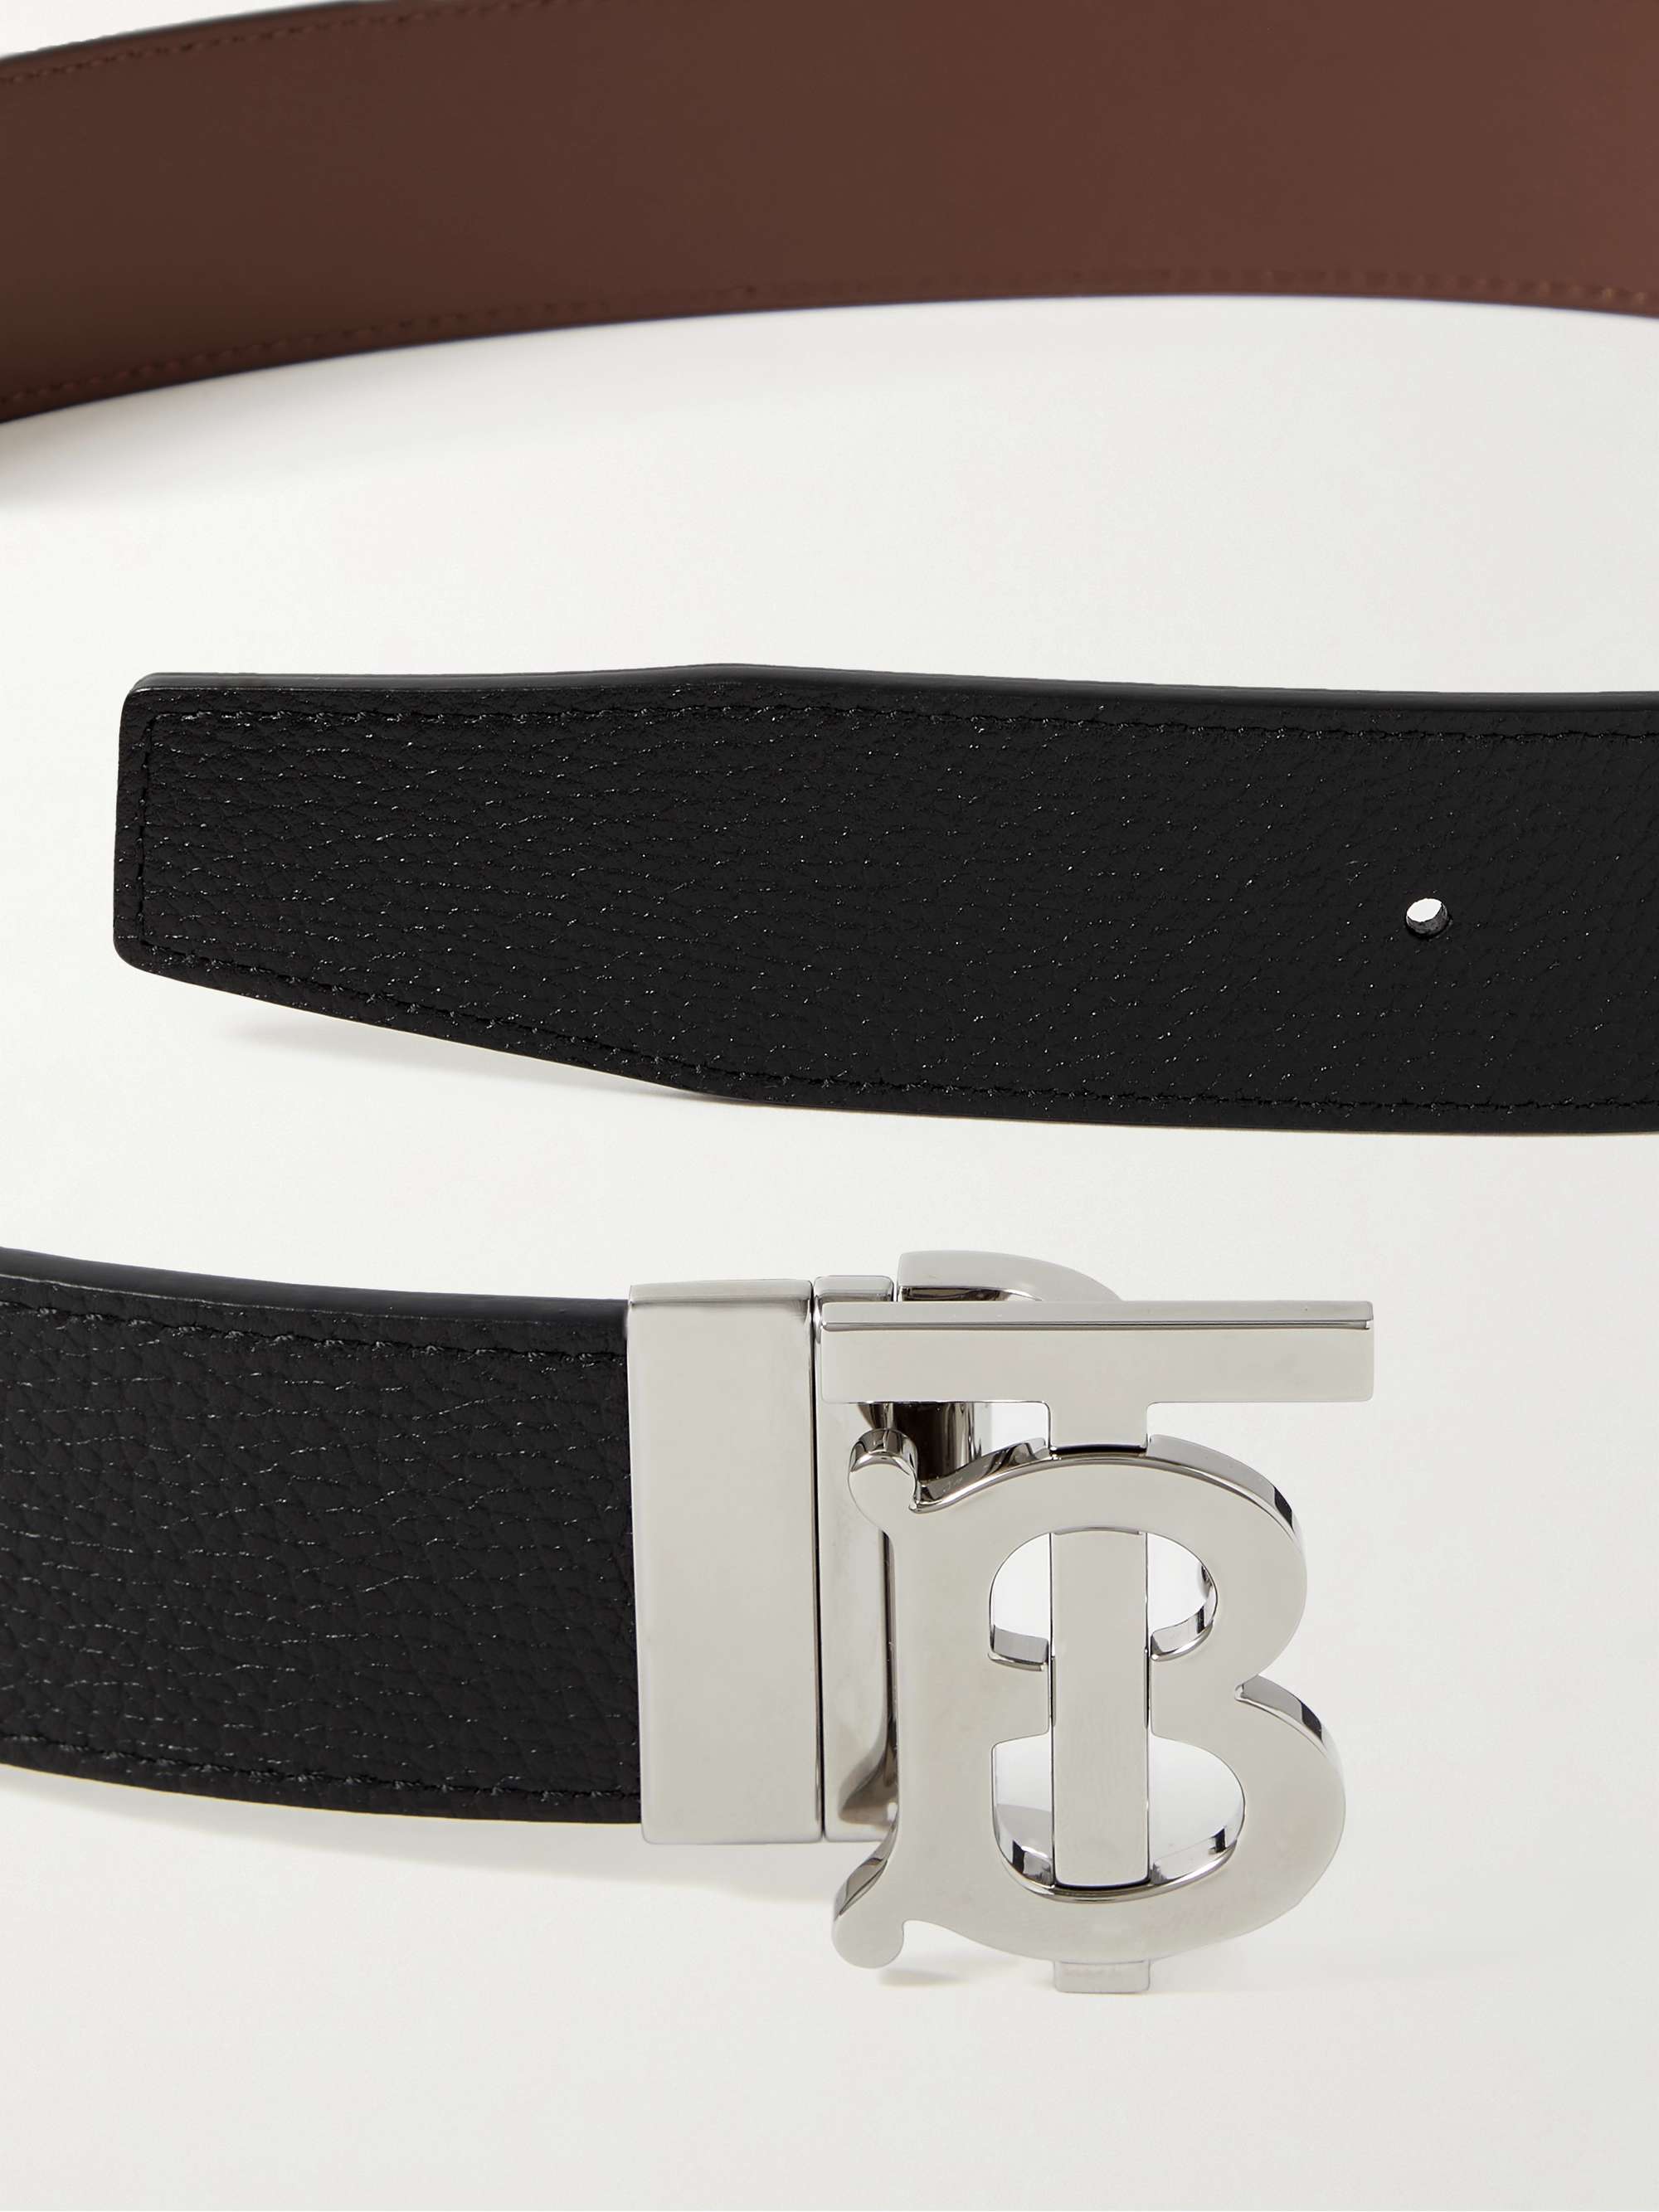 Burberry Buckle Belts for Men